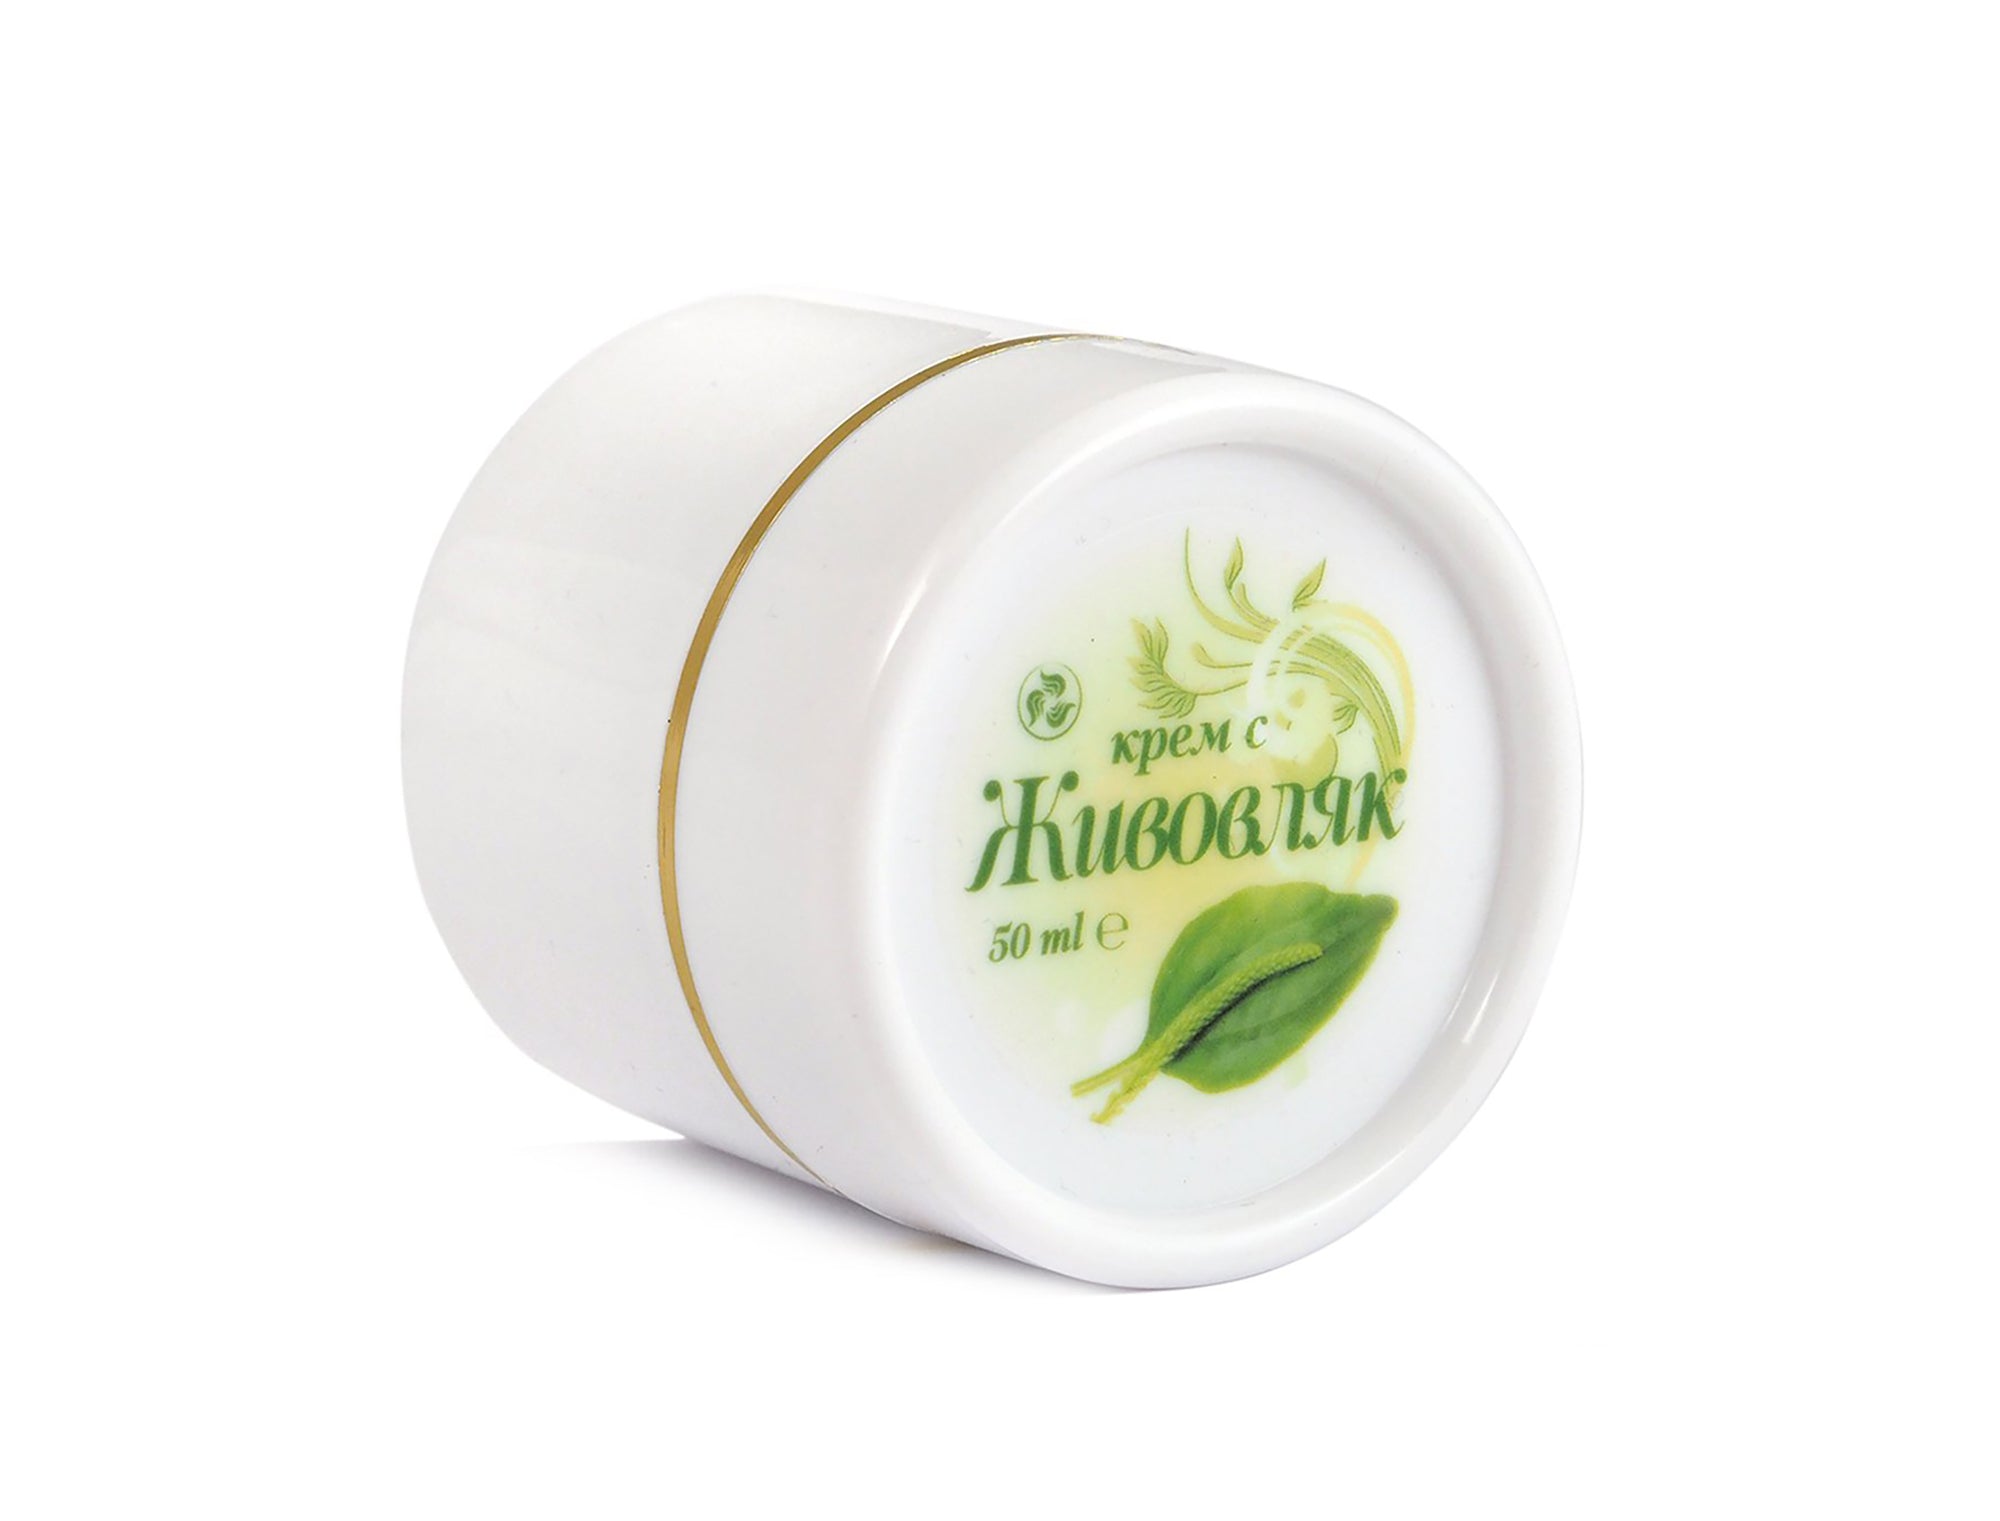 Handmade Plantago Cream 50ml | Premium Cream Plantain Ointment Extract